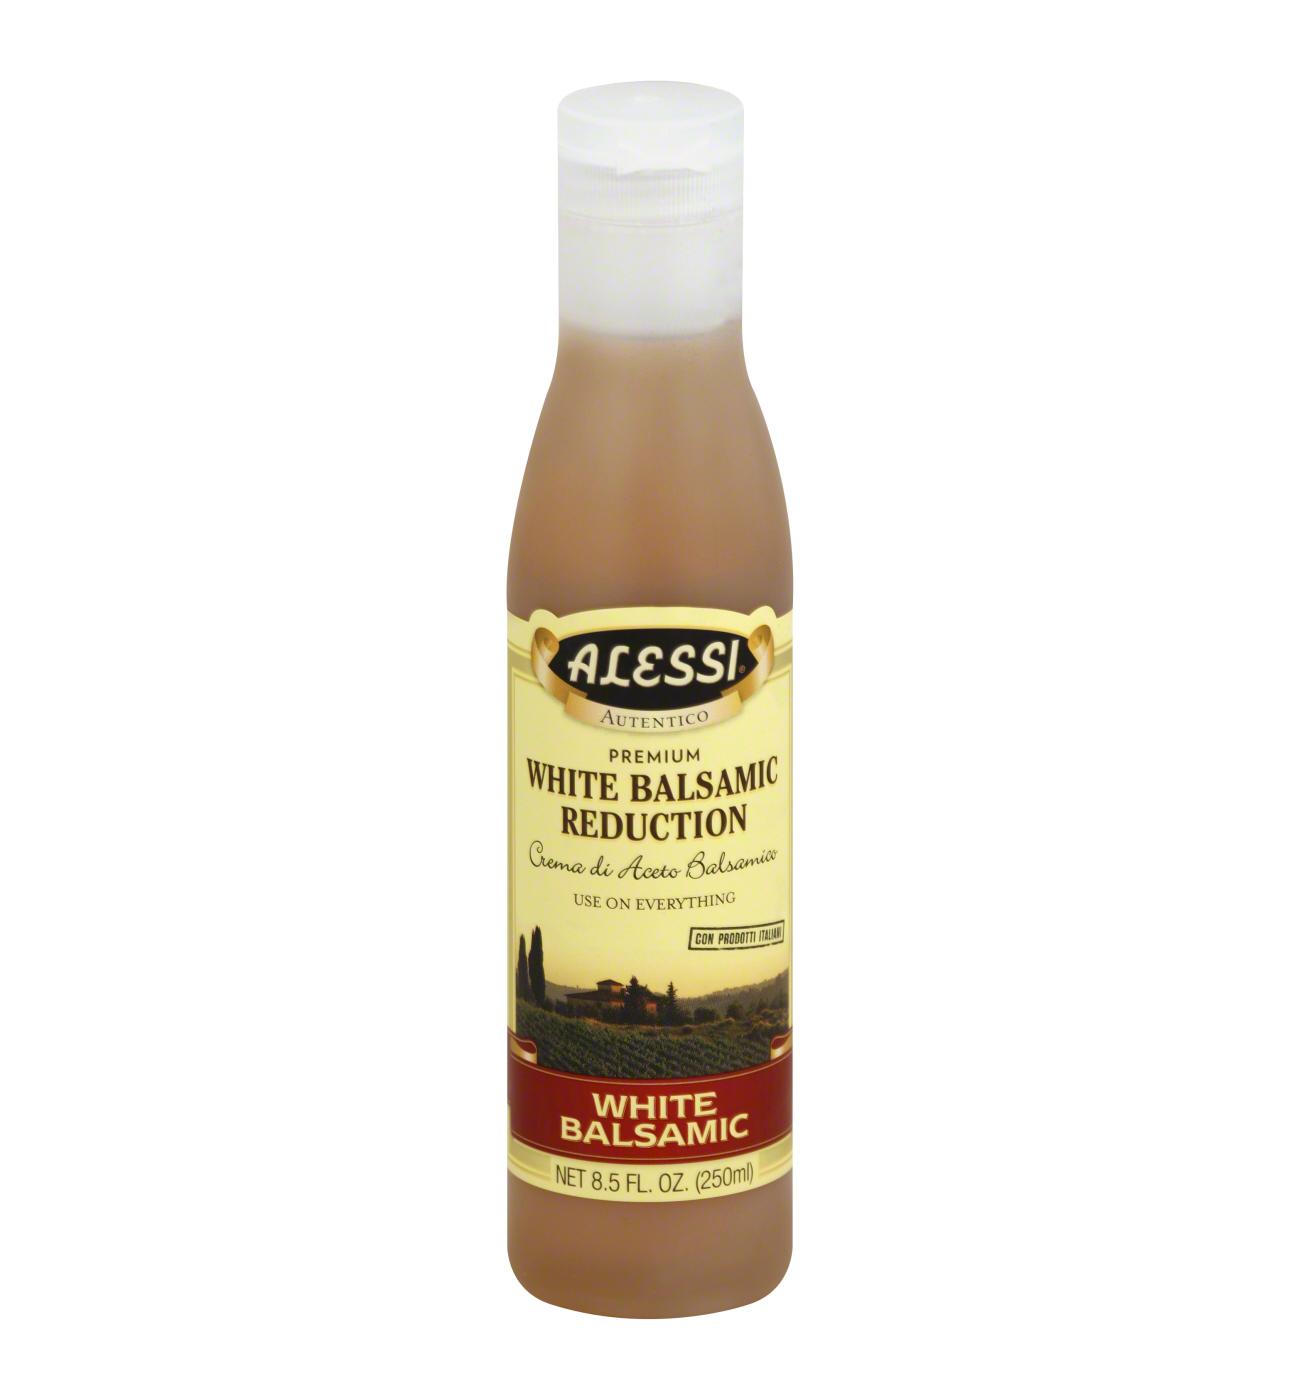 Alessi Premium White Balsamic Reduction; image 2 of 2